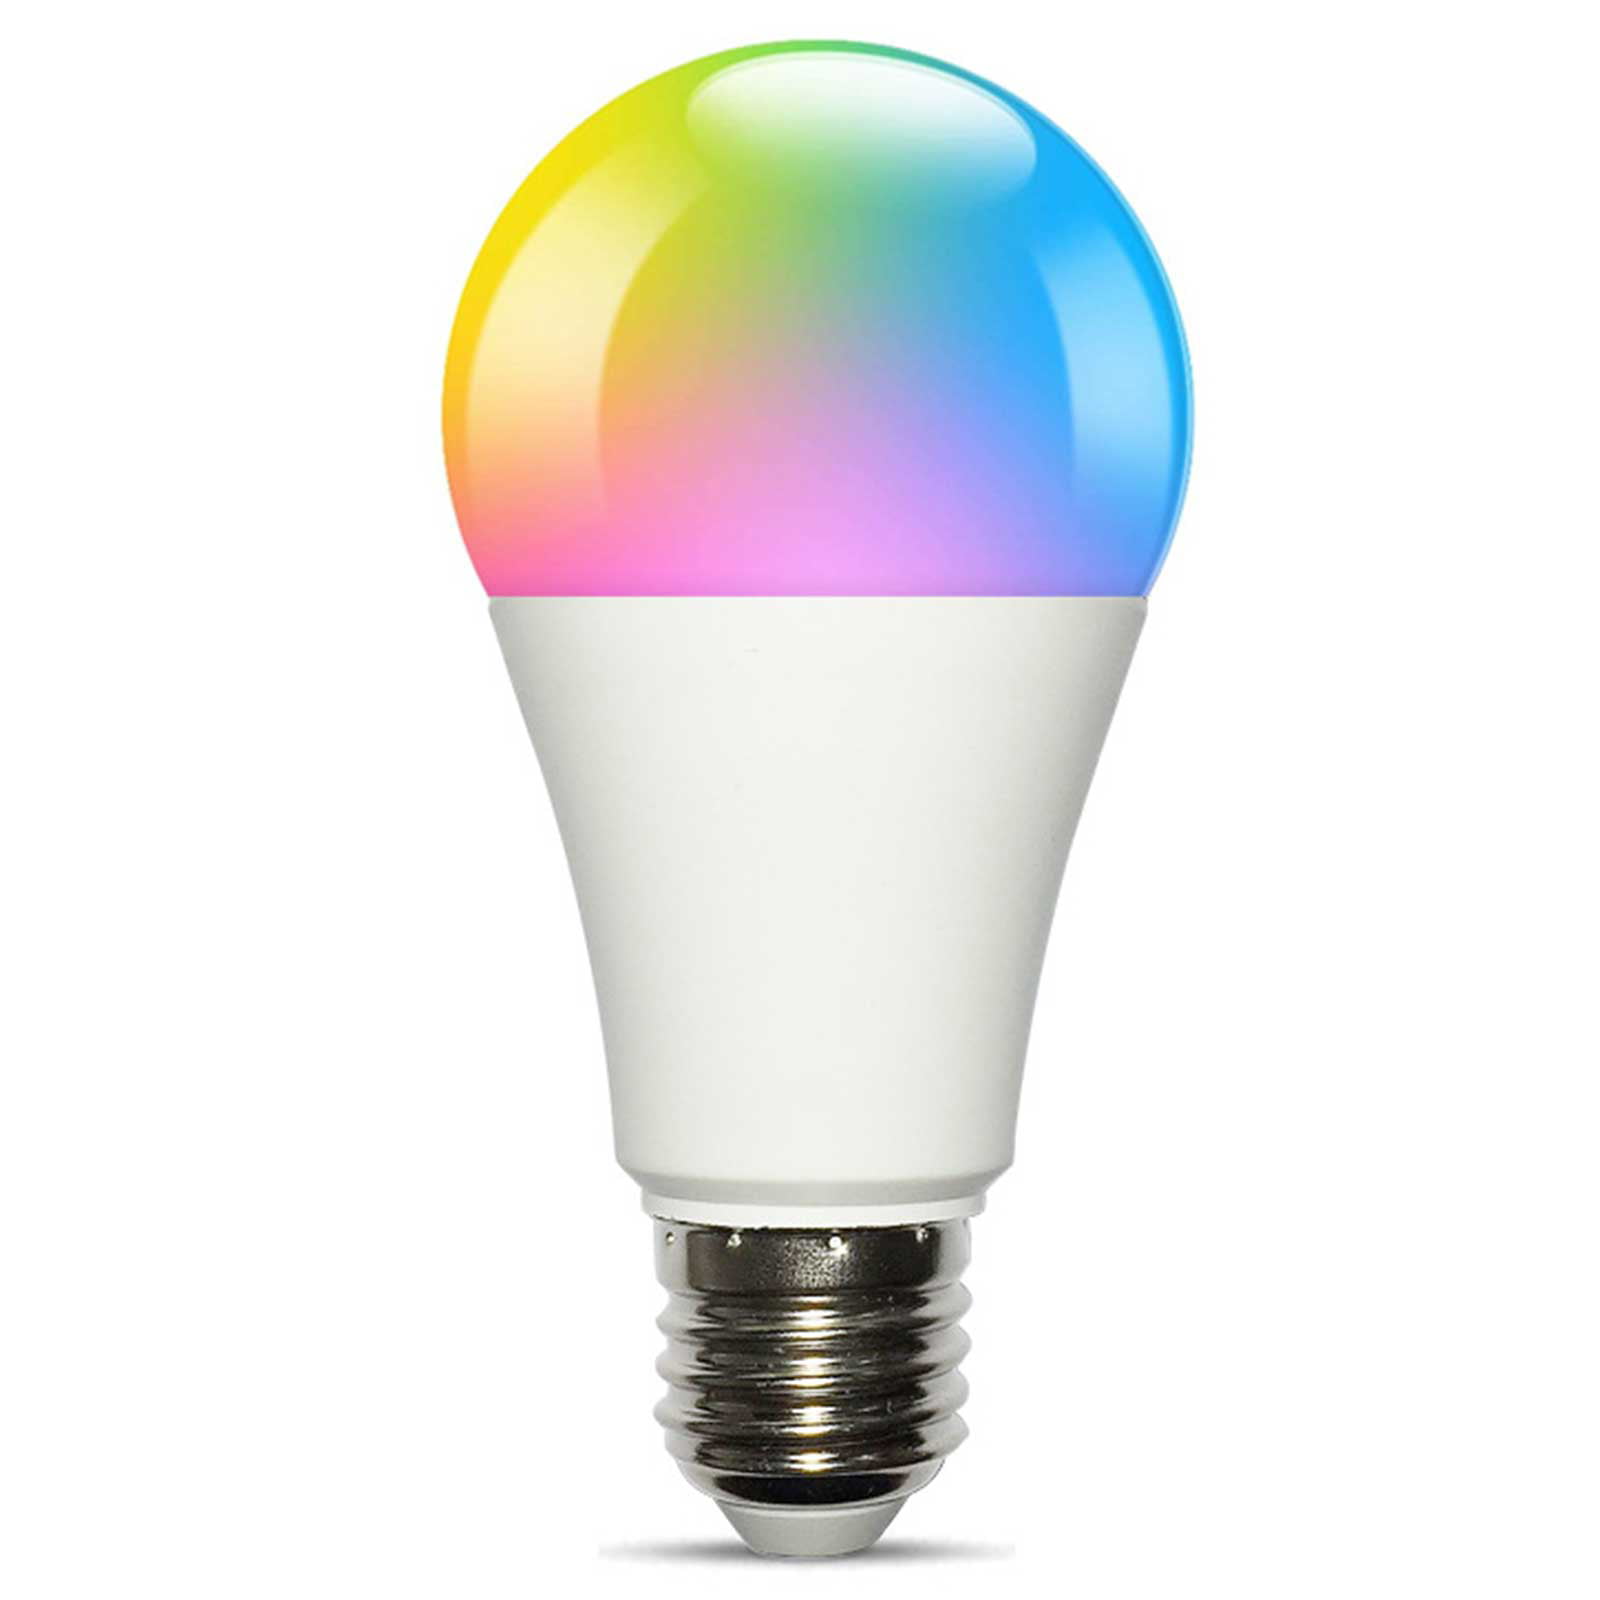 Walmeck 365nm UV Light Bulb Blacklight E27 Lamp Base Sterilization Monetary Validation